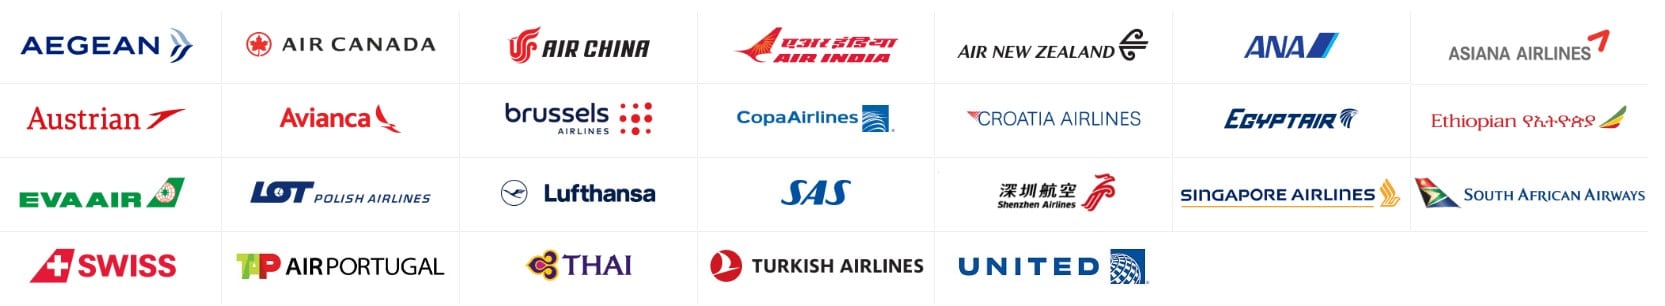 star alliance - member airlines